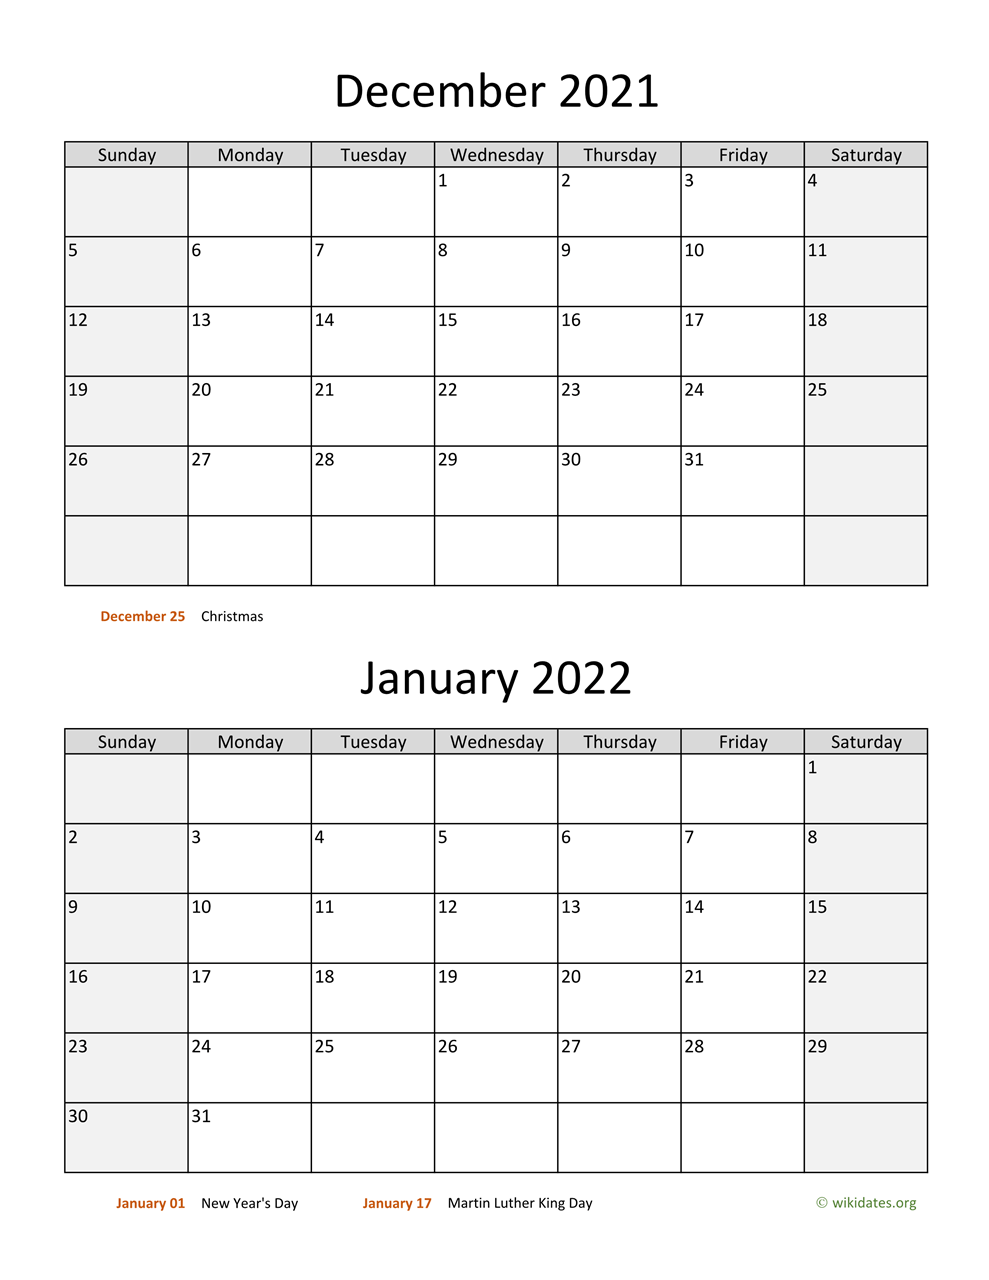 December January Calendar 2022 December 2021 And January 2022 Calendar | Wikidates.org